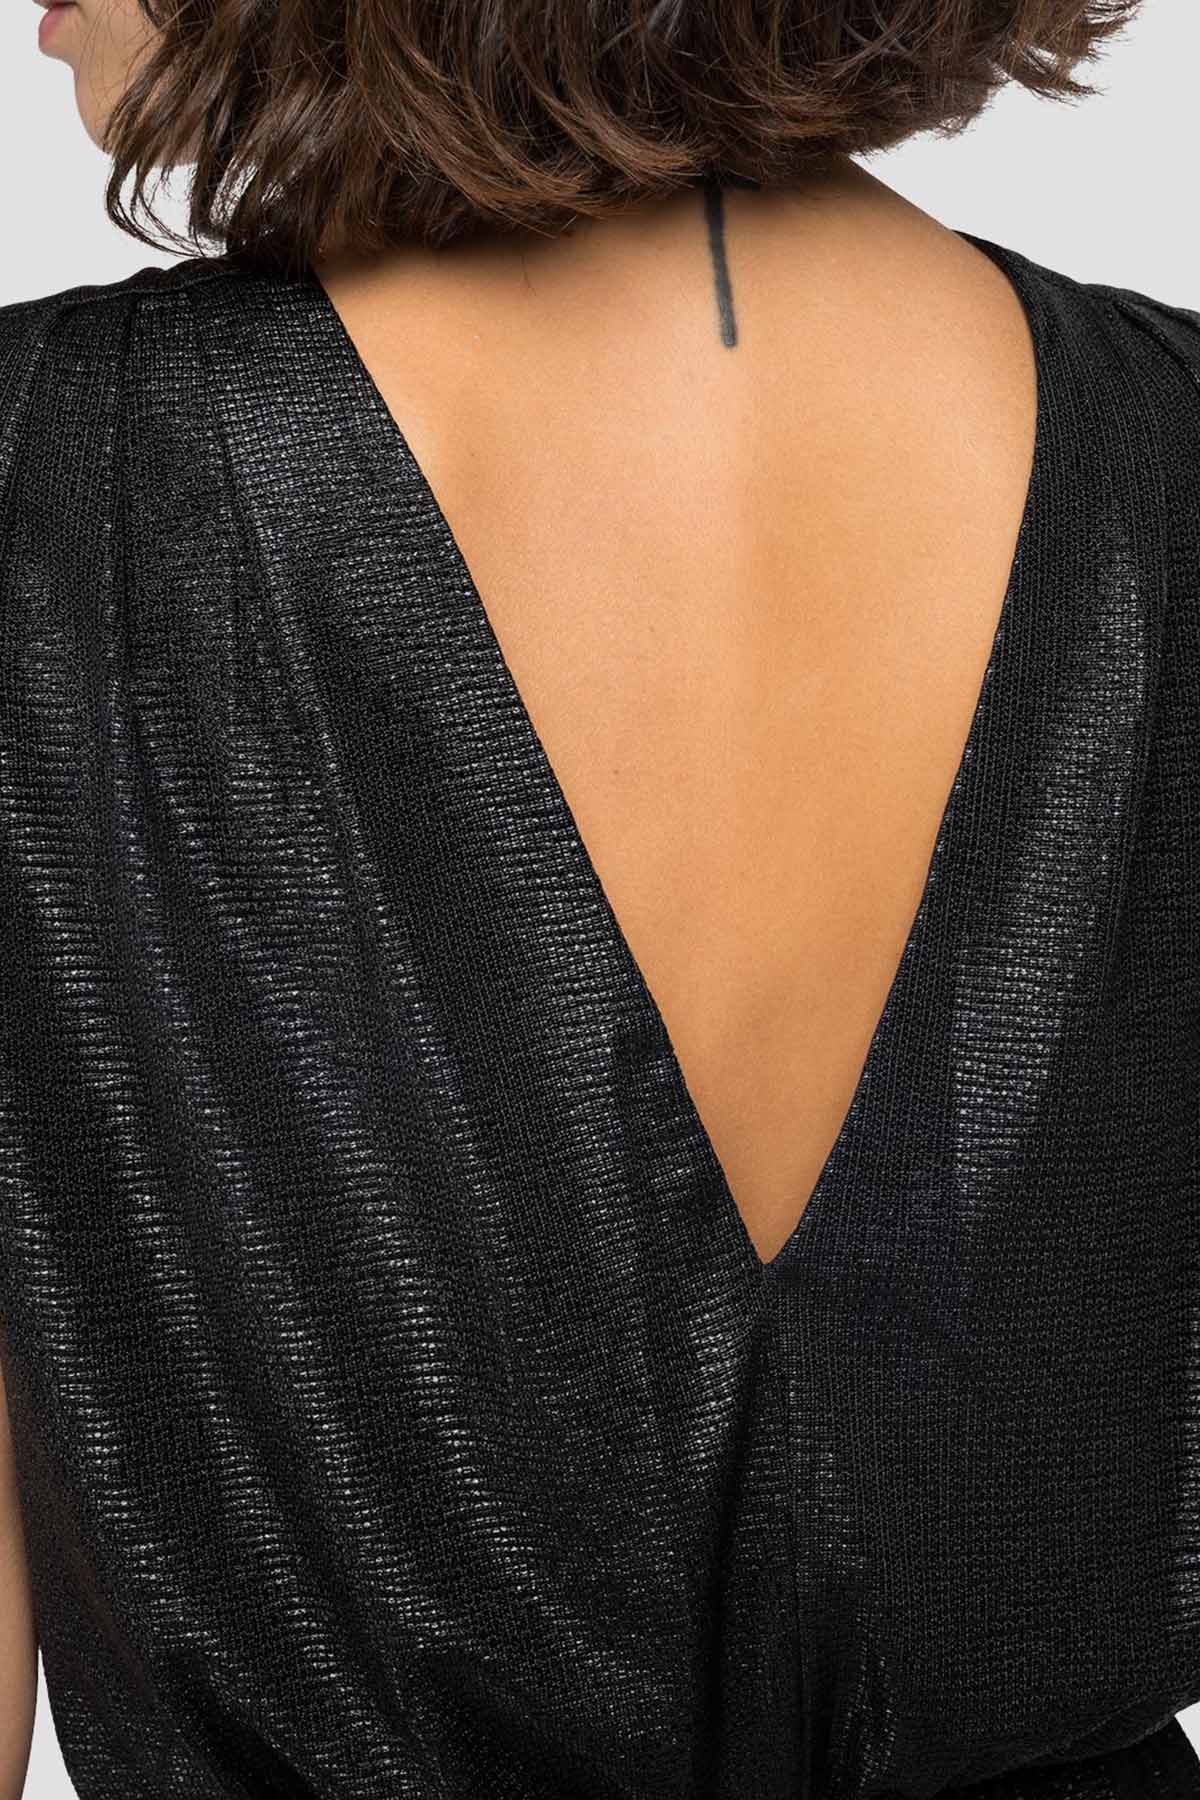 Replay Belden Büzgülü Maxi Elbise-Libas Trendy Fashion Store